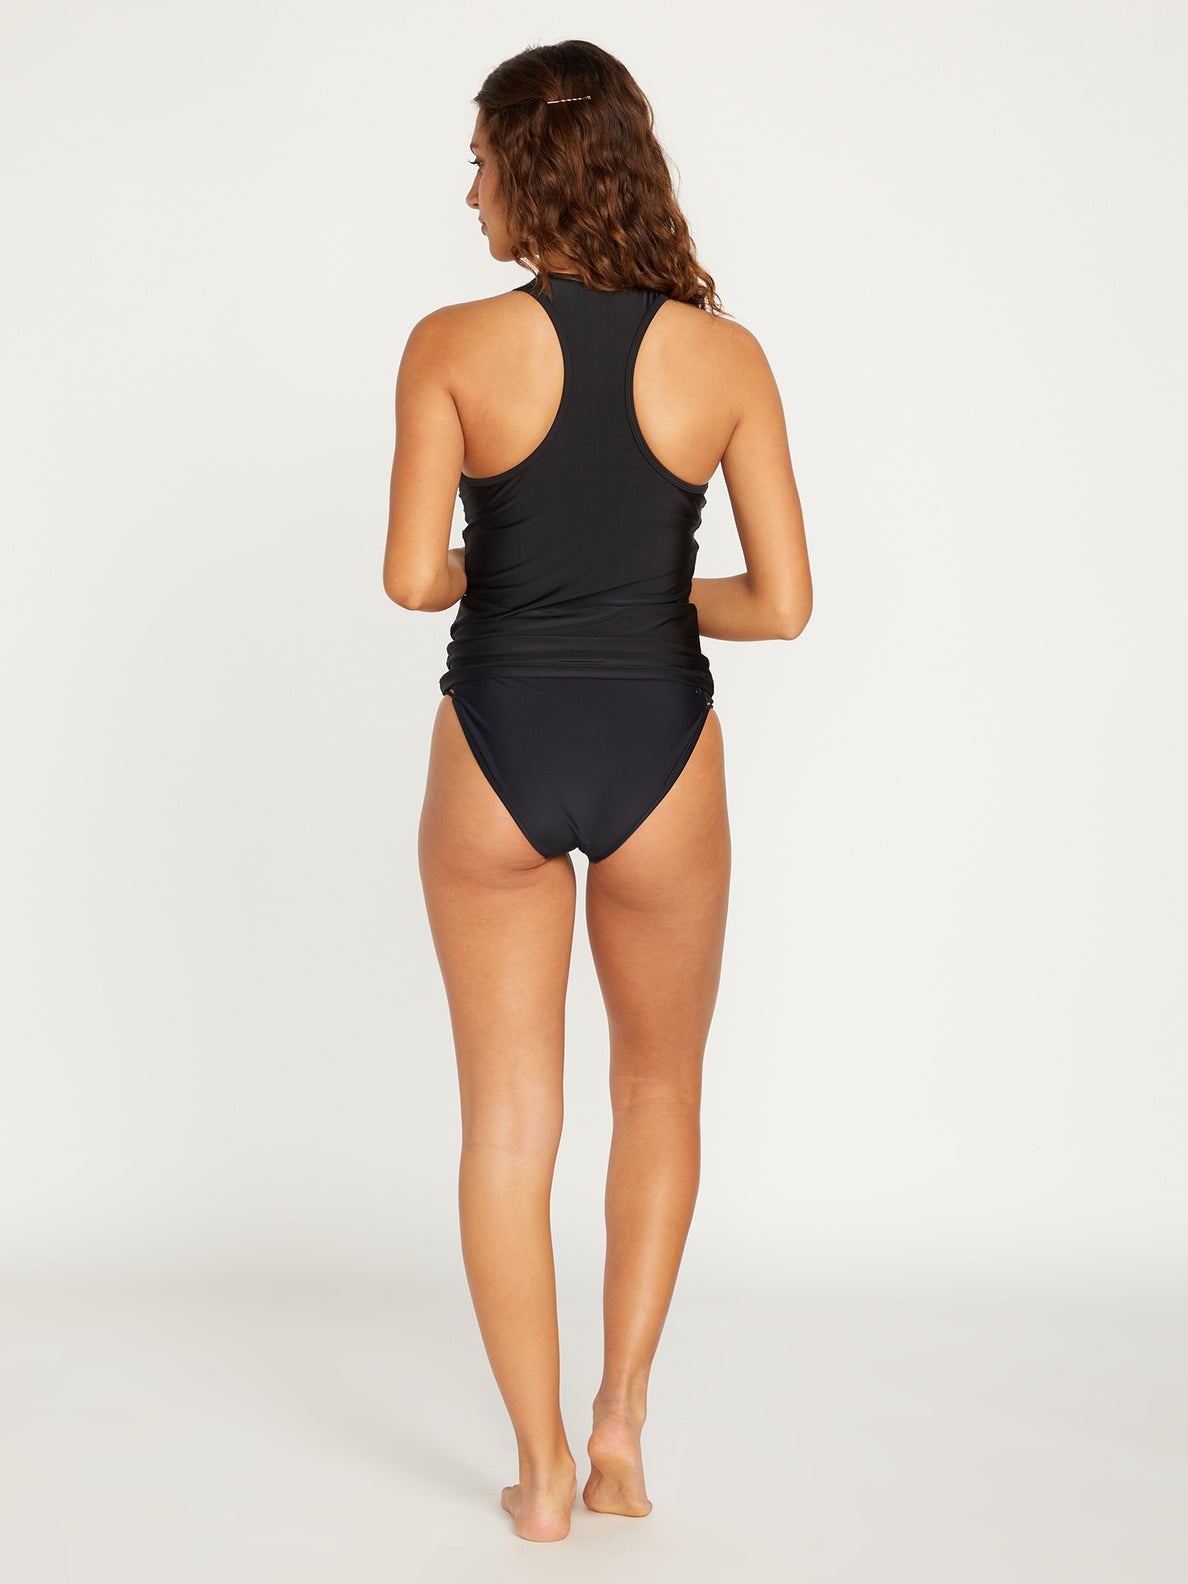 Simply Core Tankini Bikini Top - Black – Volcom Canada